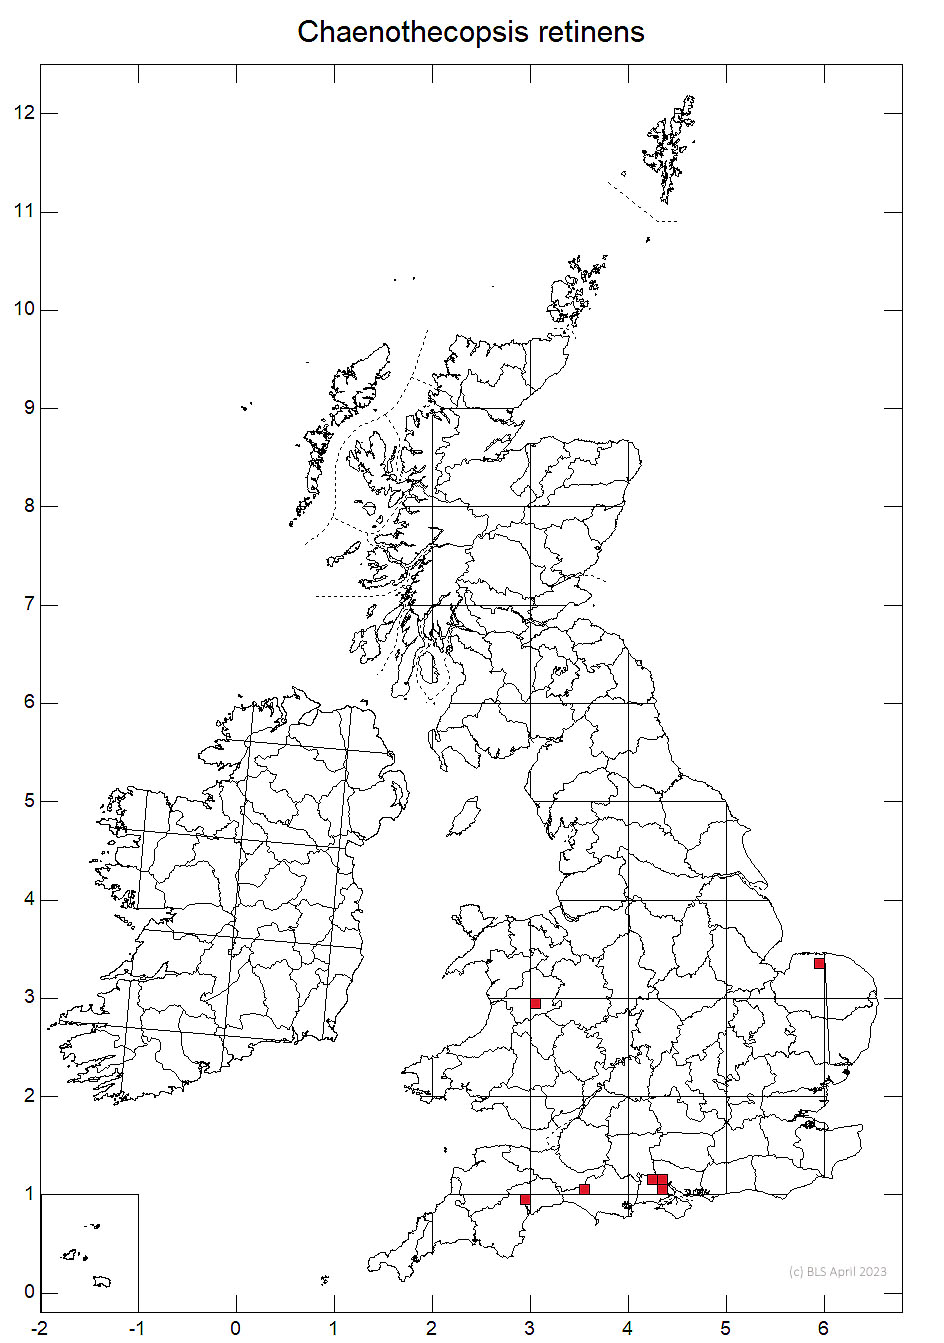 Chaenothecopsis retinens 10km sq distribution map